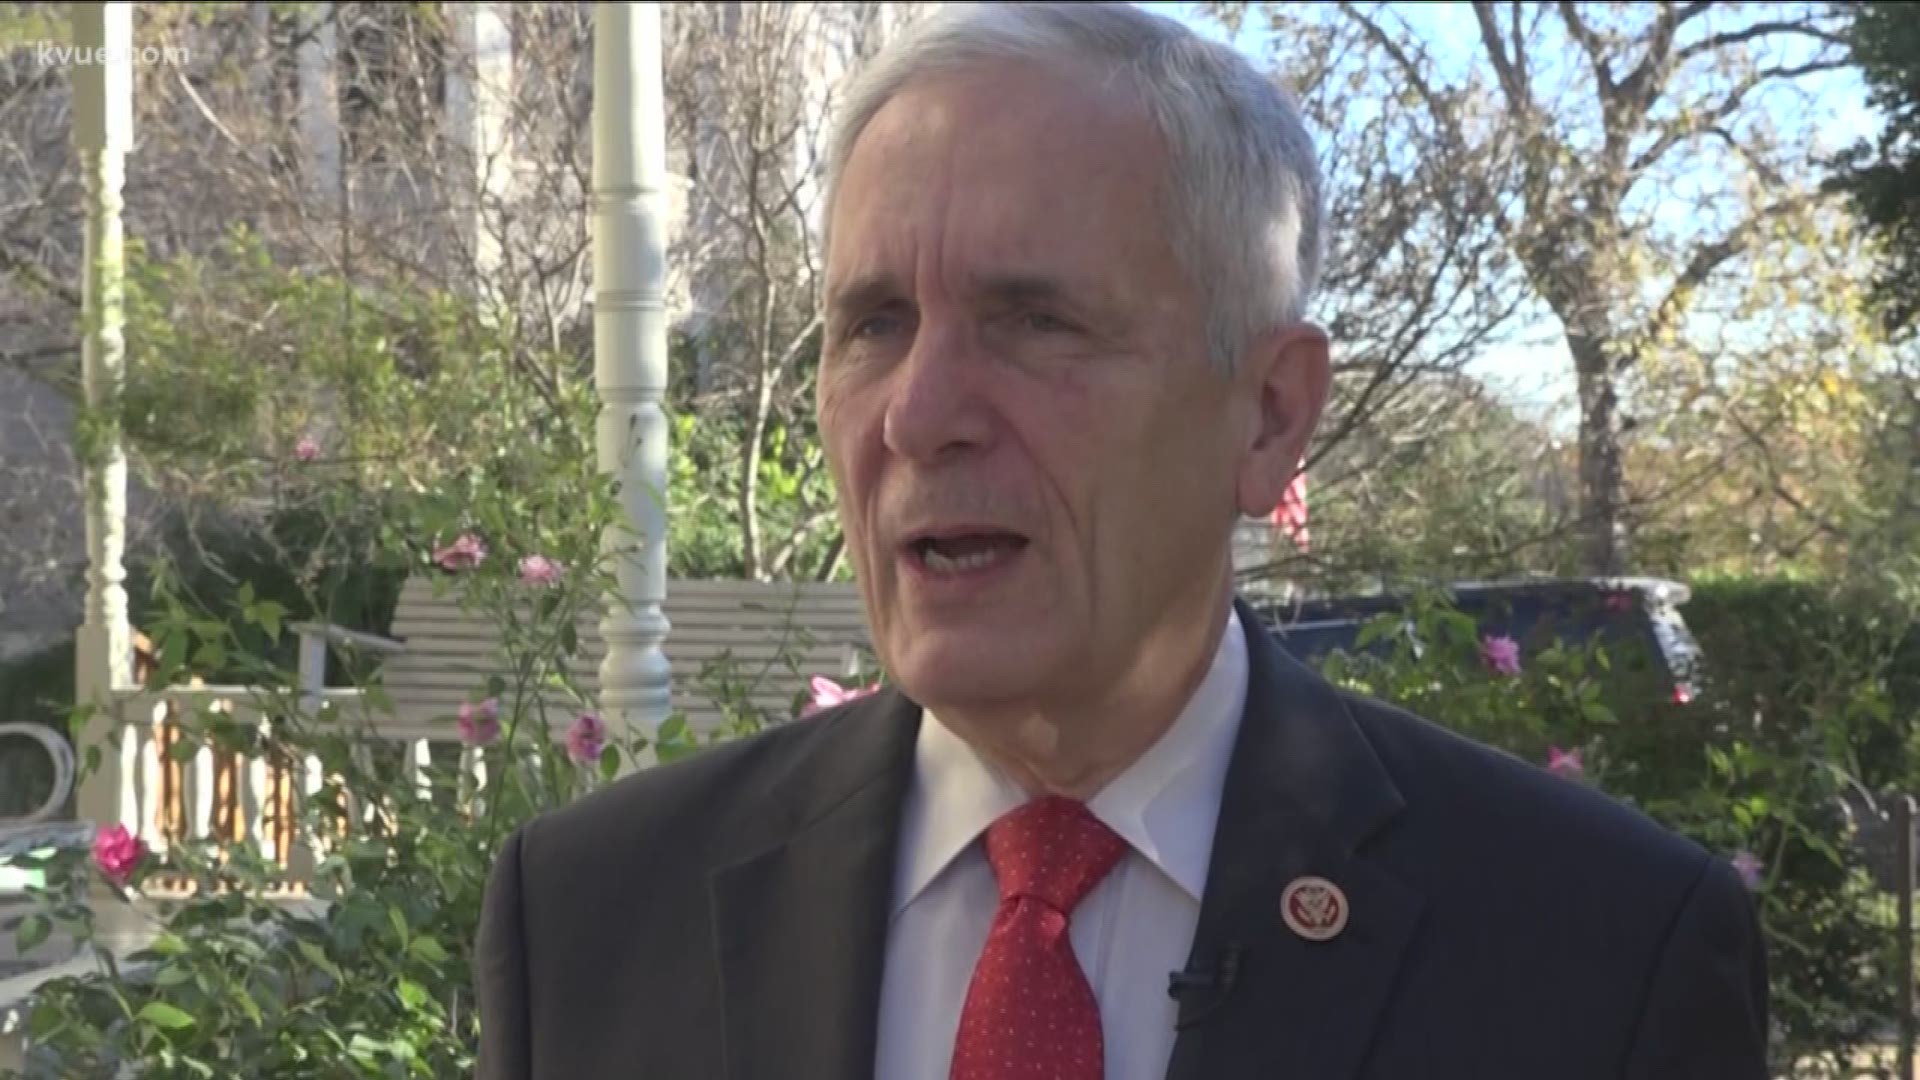 Several Texas congressman spoke to KVUE on Saturday, sharing their memories of former President George H.W. Bush.